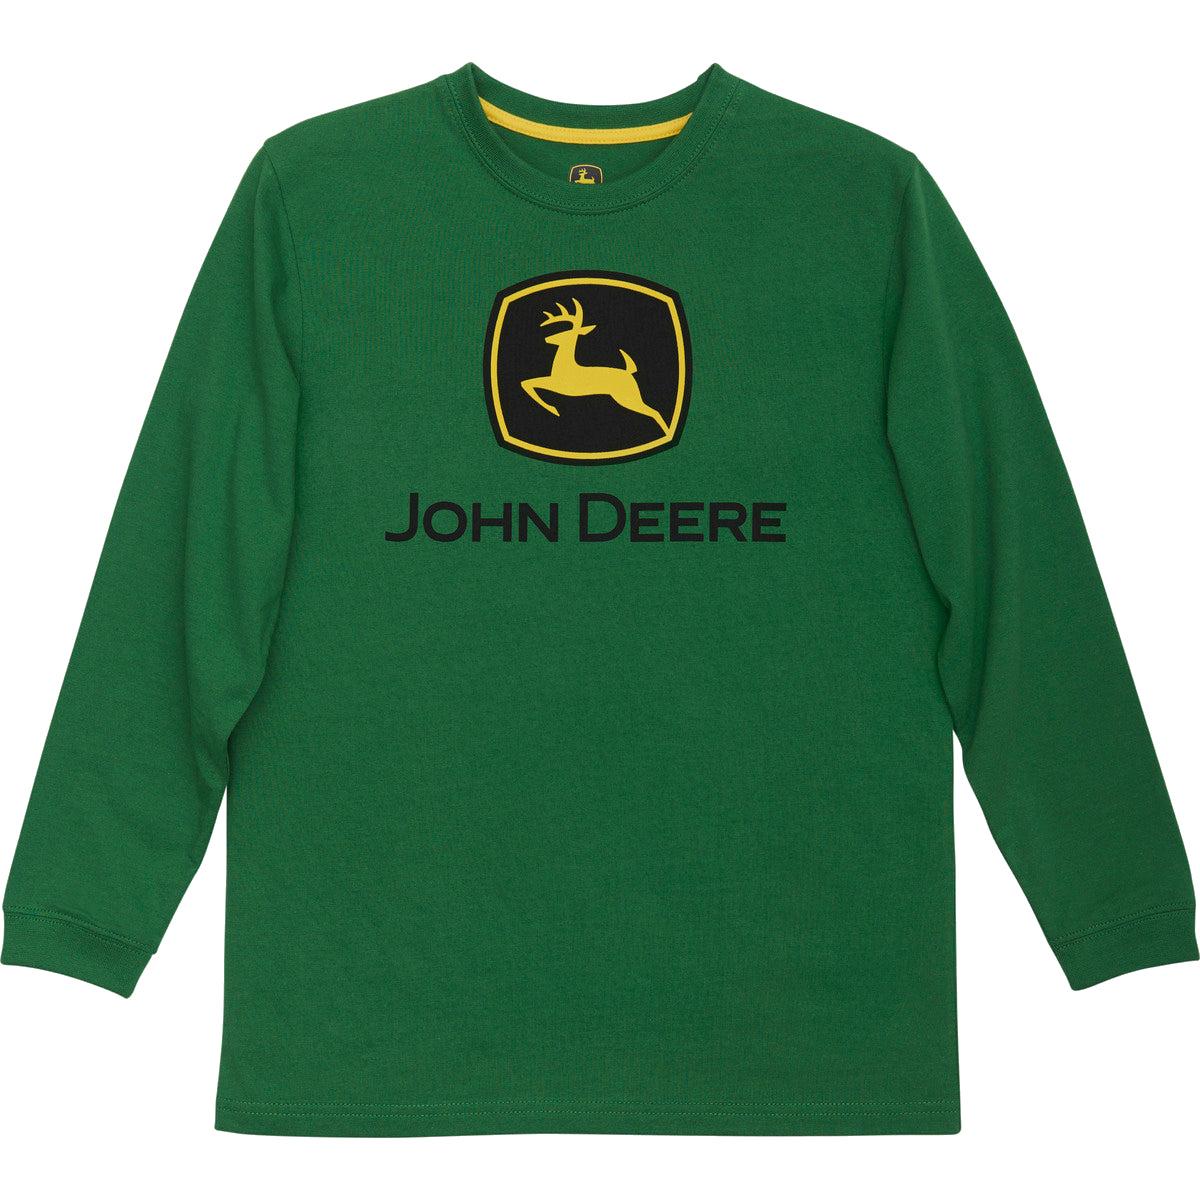 John Deere Green Logo Long Sleeved T-Shirt Youth Medium - LP79422